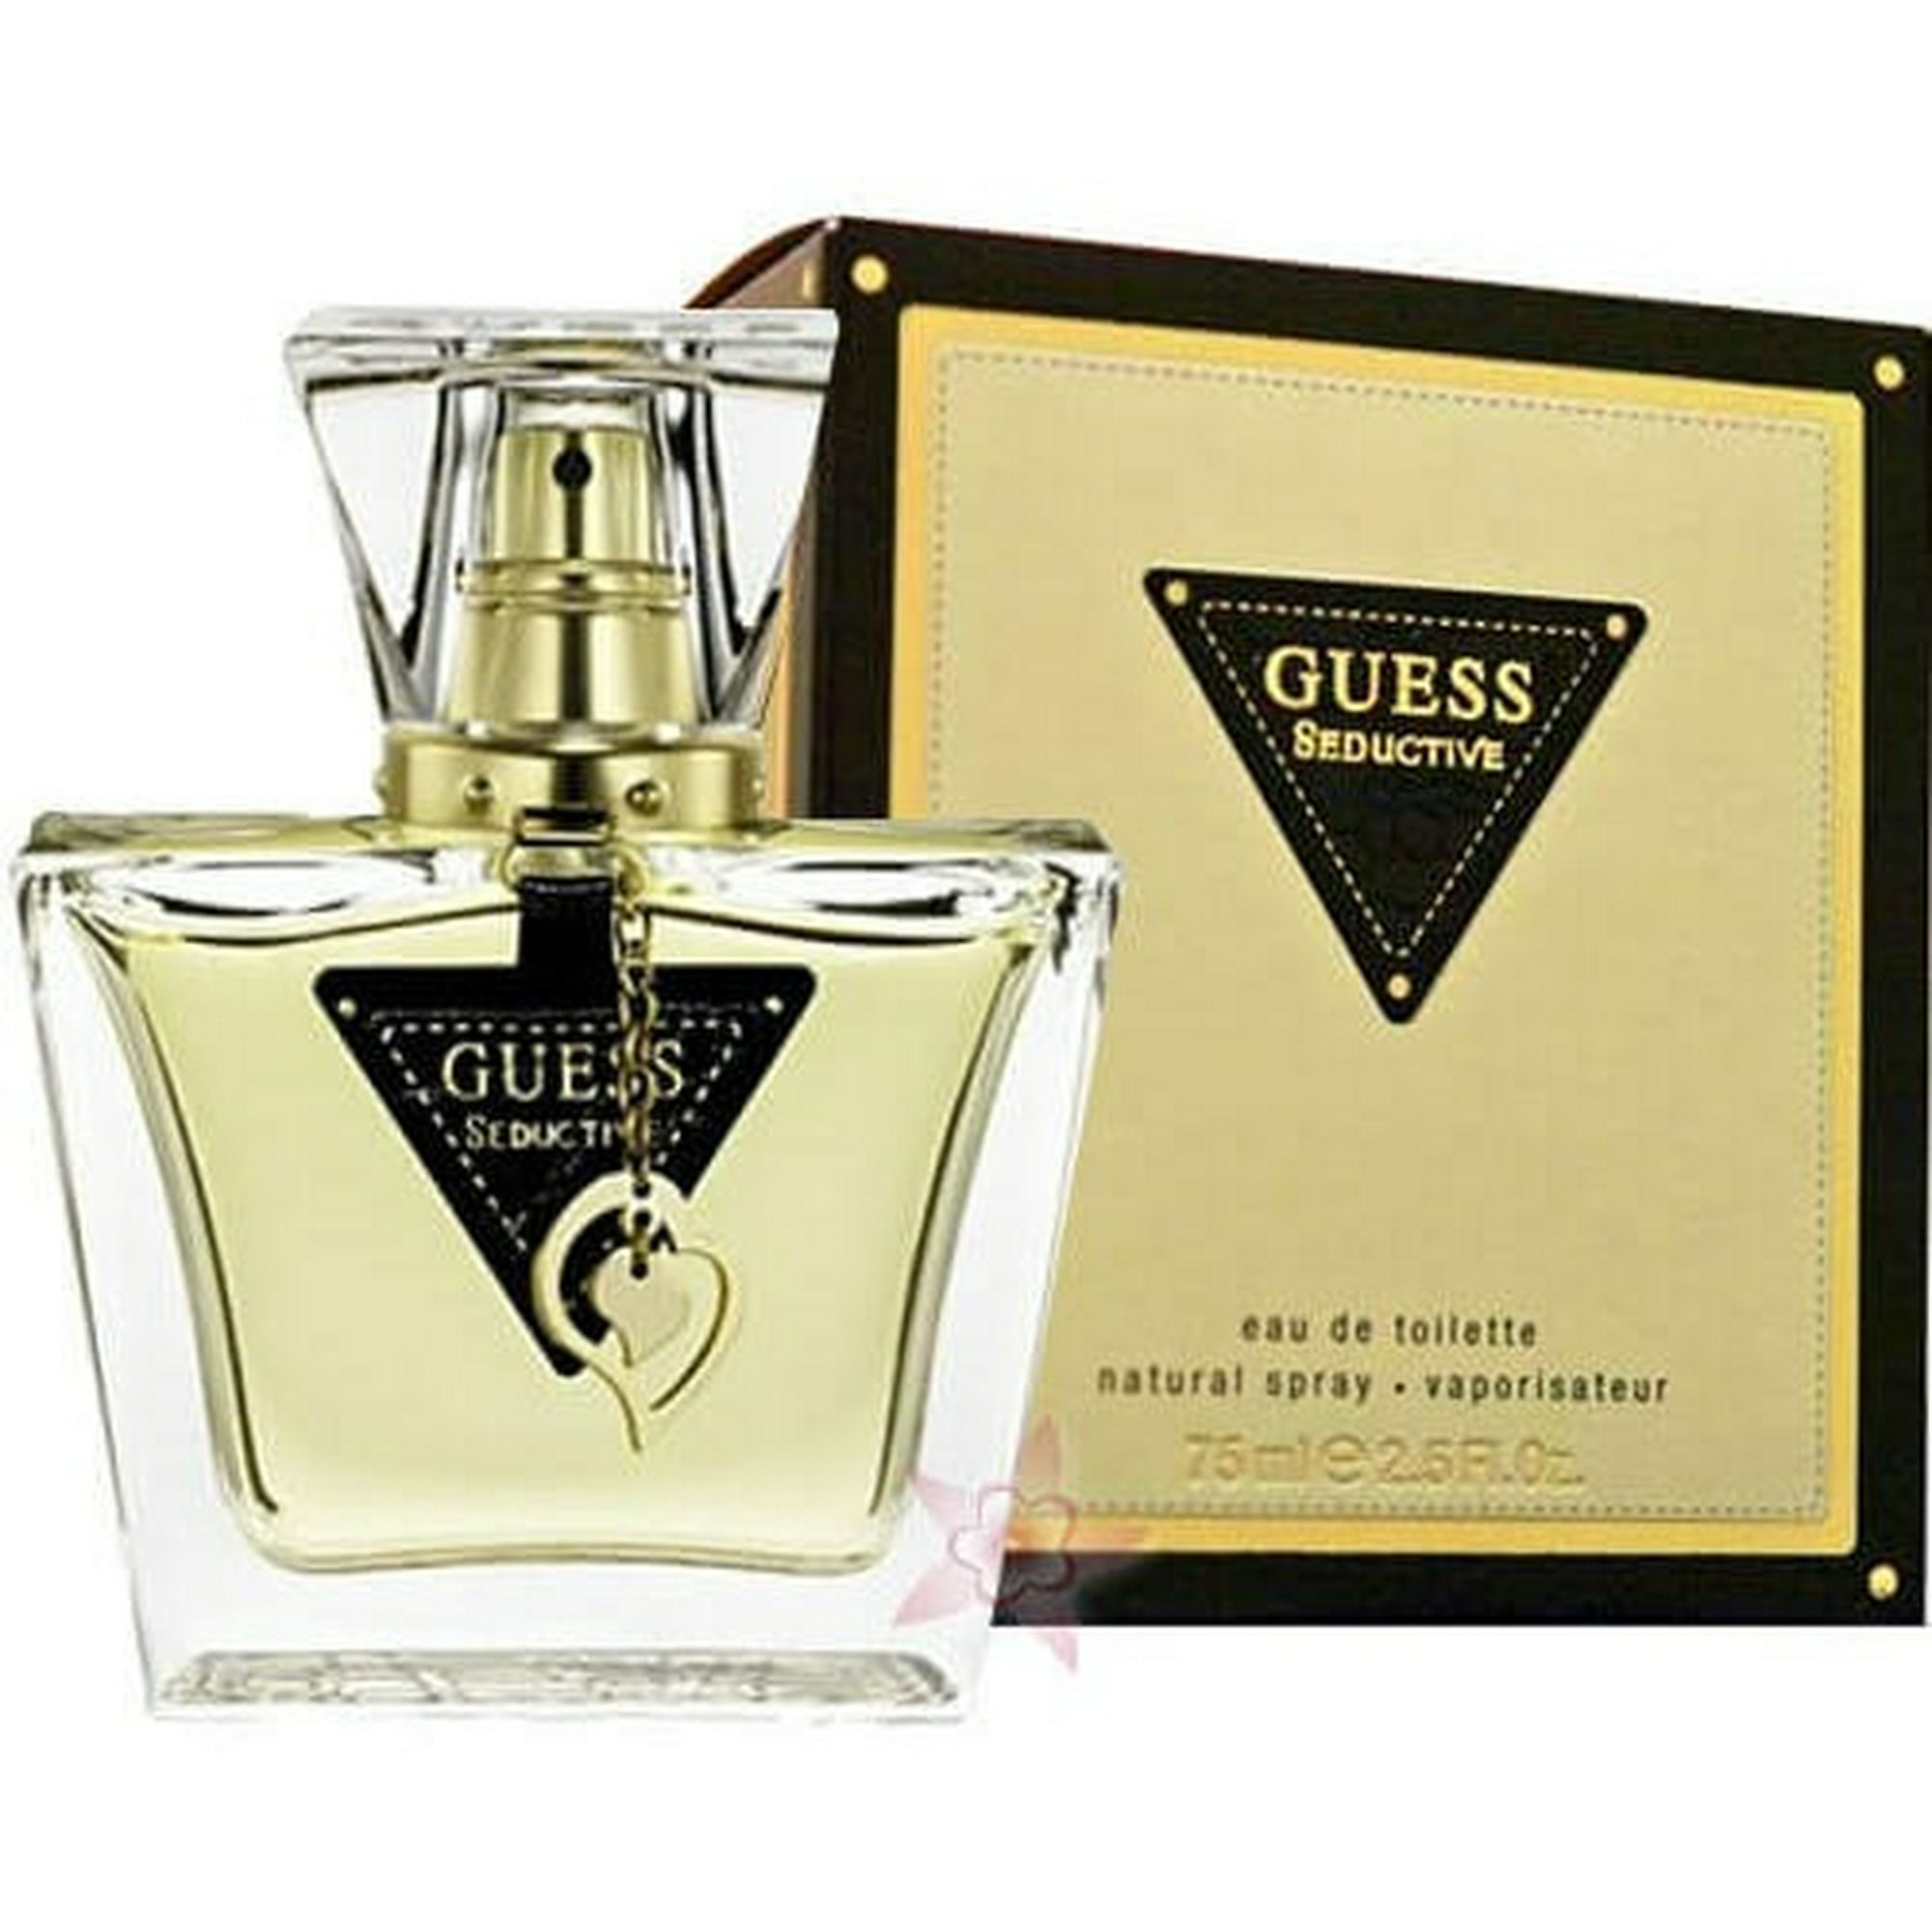 Perfume Guess Seductive Mujer De Guess Edt 75 Ml Original Guess Guess ...